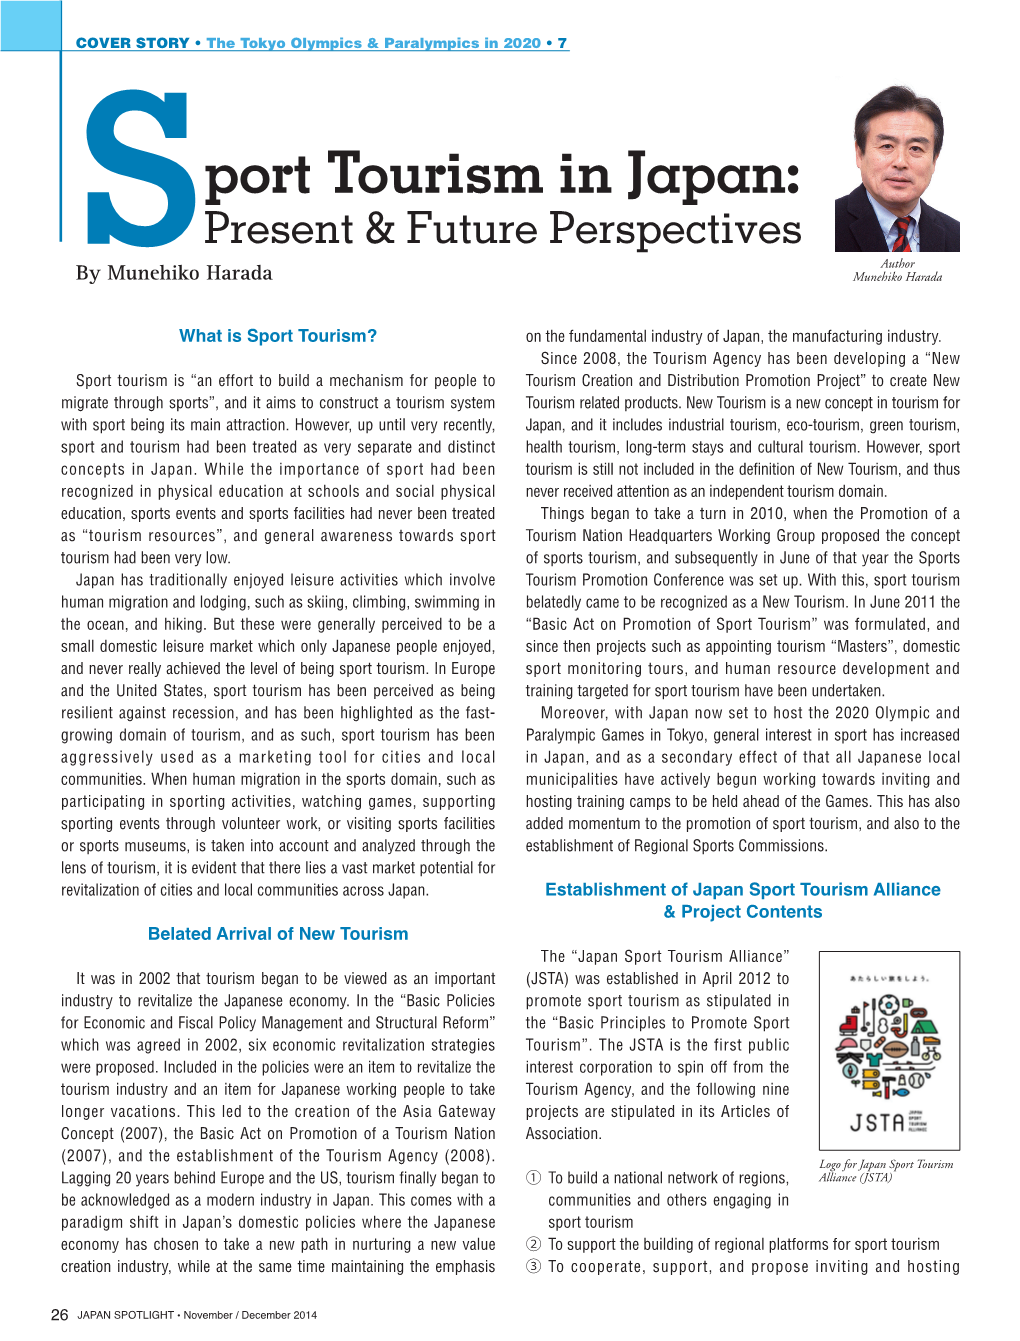 Port Tourism in Japan: Present & Future Perspectives Author Sby Munehiko Harada Munehiko Harada